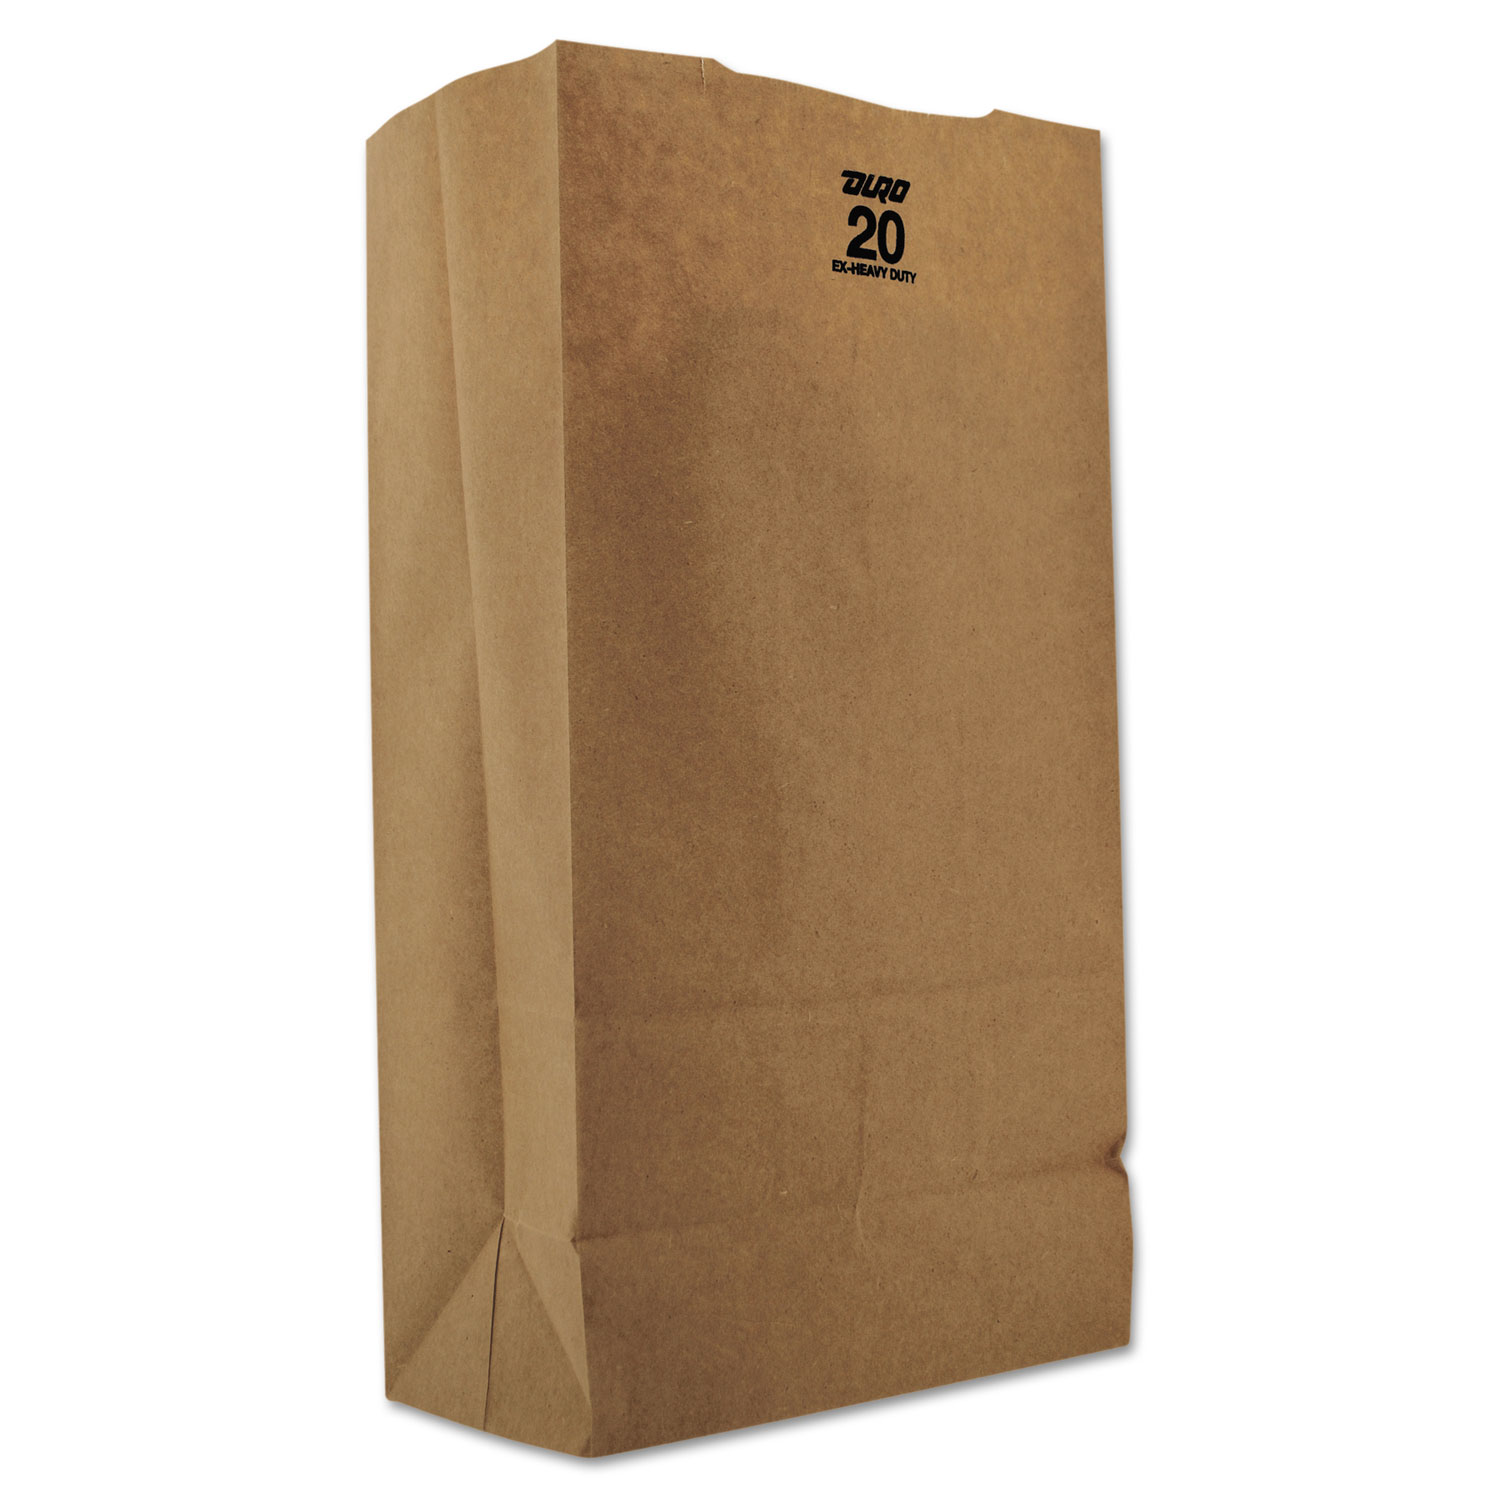 #20 Paper Grocery, 57lb Kraft, Extra Heavy-Duty 8 1/4x5 5/16 x16 1/8, 500 bags